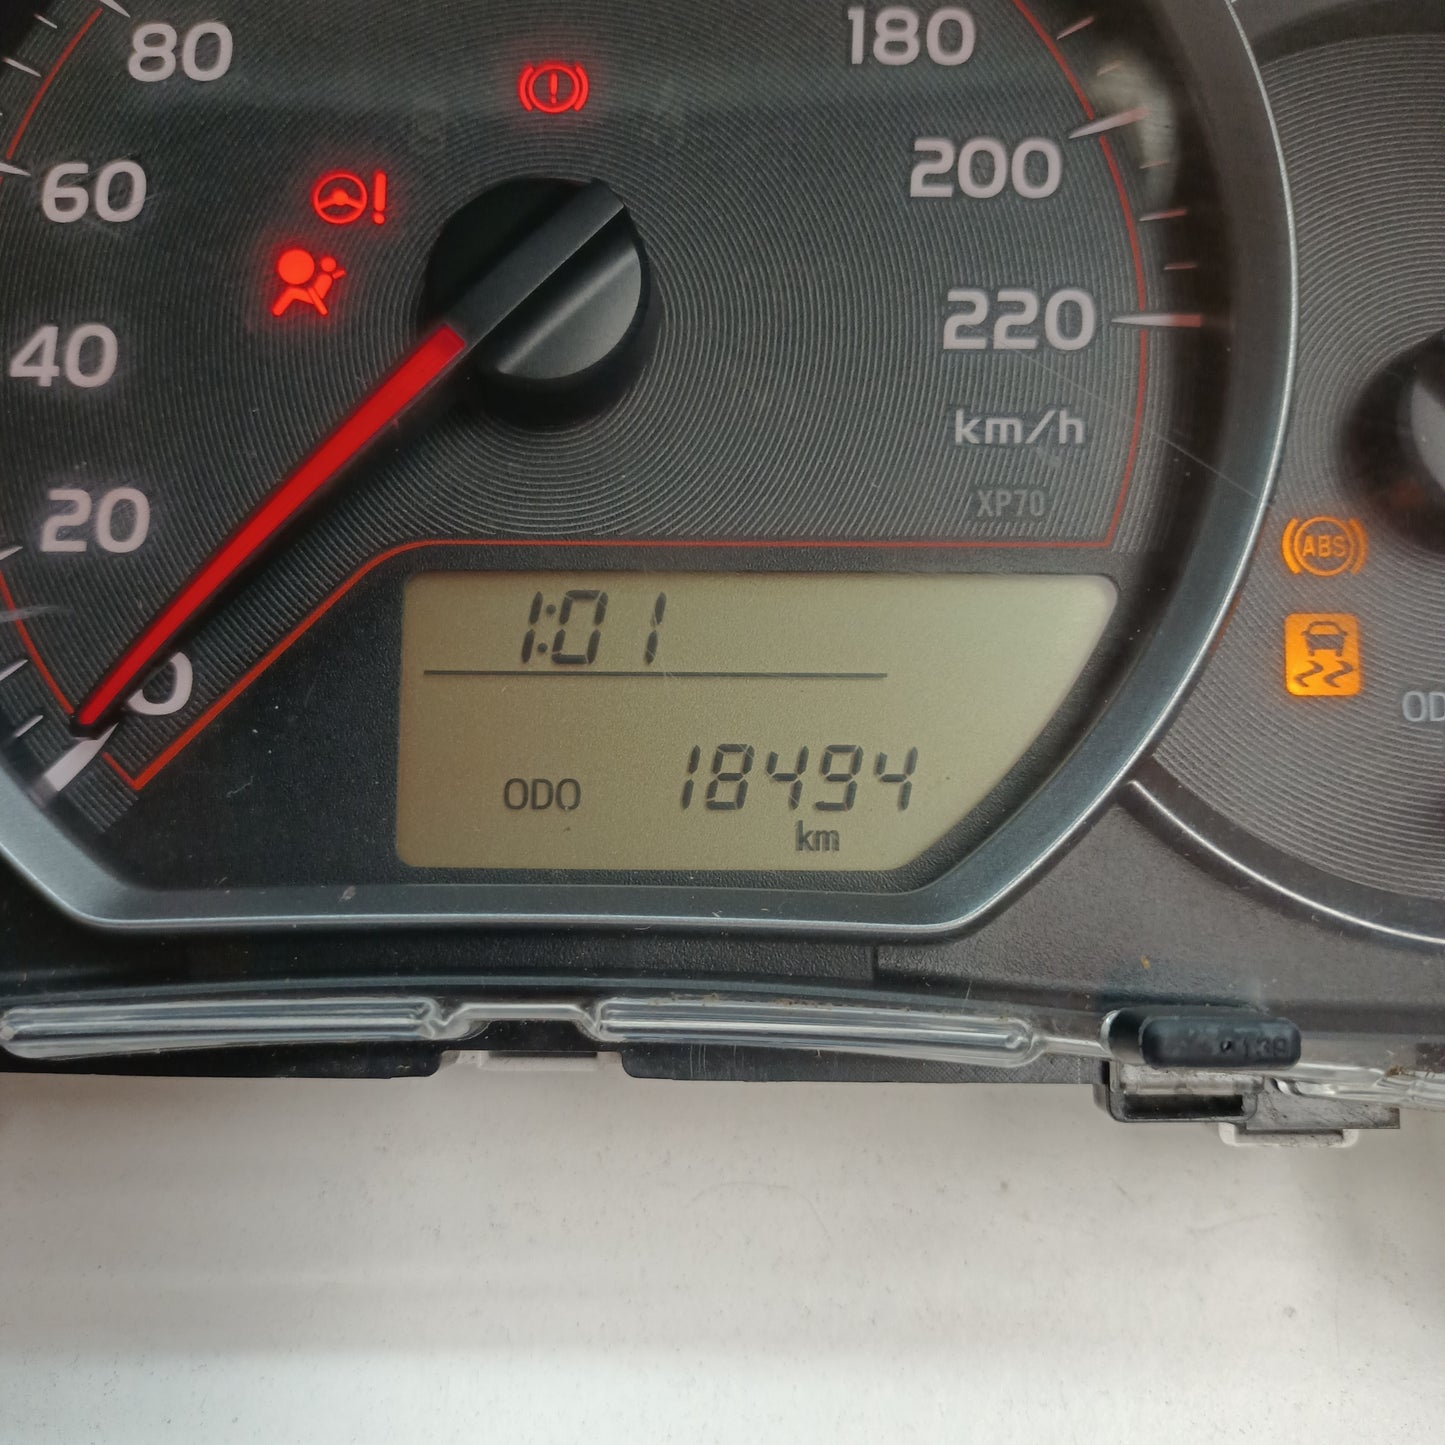 Toyota Yaris Hatchback Instrument Cluster NCP13# 2011 2012 2013 2014 18494 km